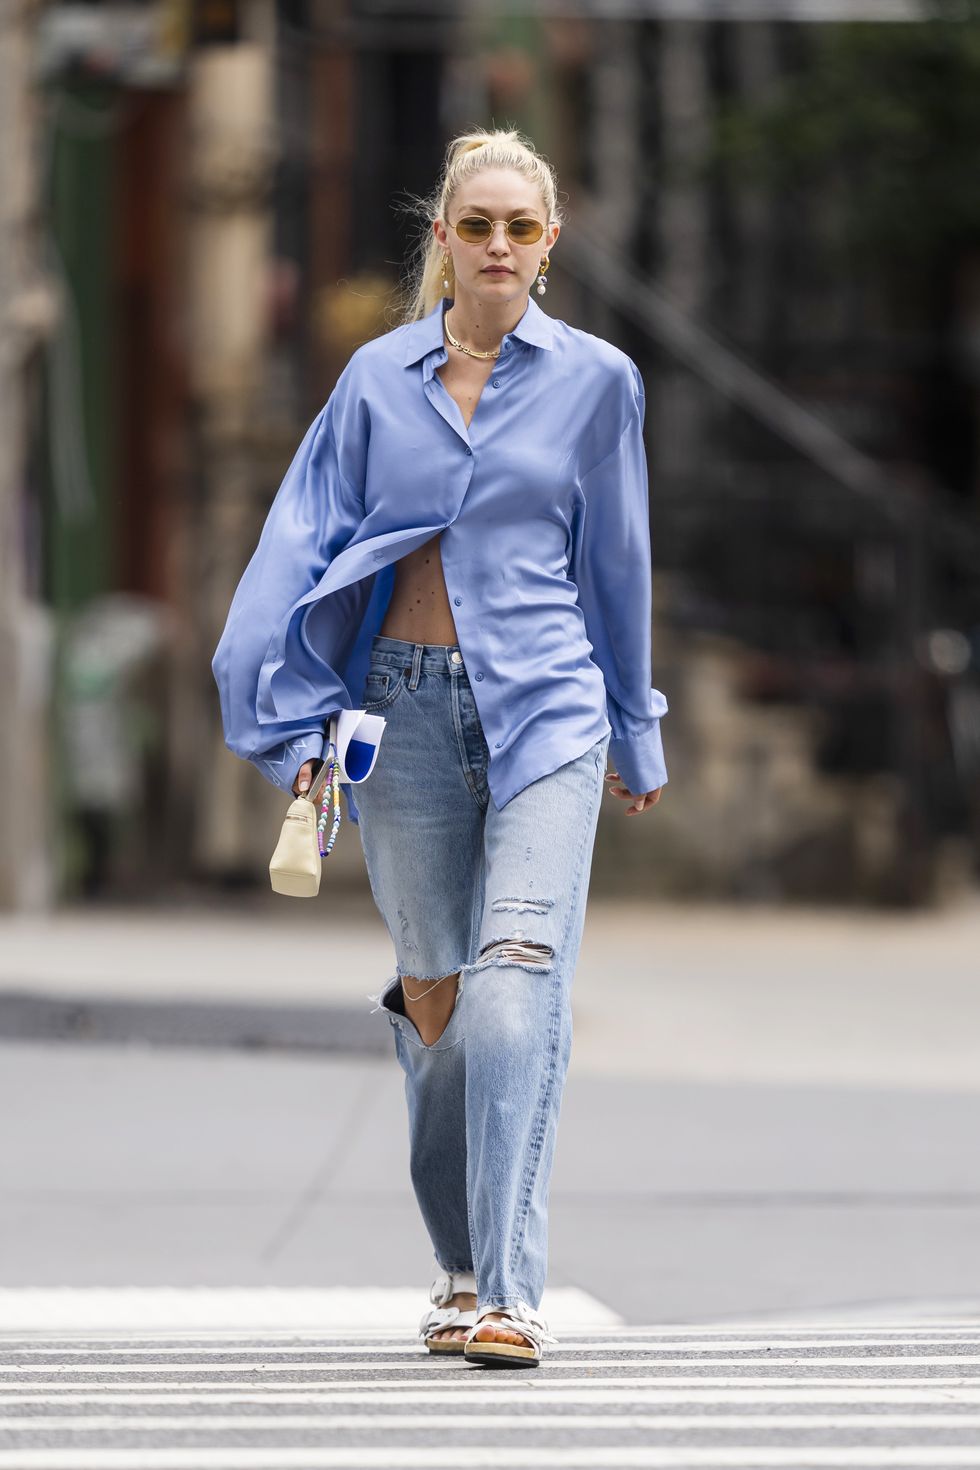 Gigi Hadid's Cornflower Blue Shirt Is a Perfect Transition Piece